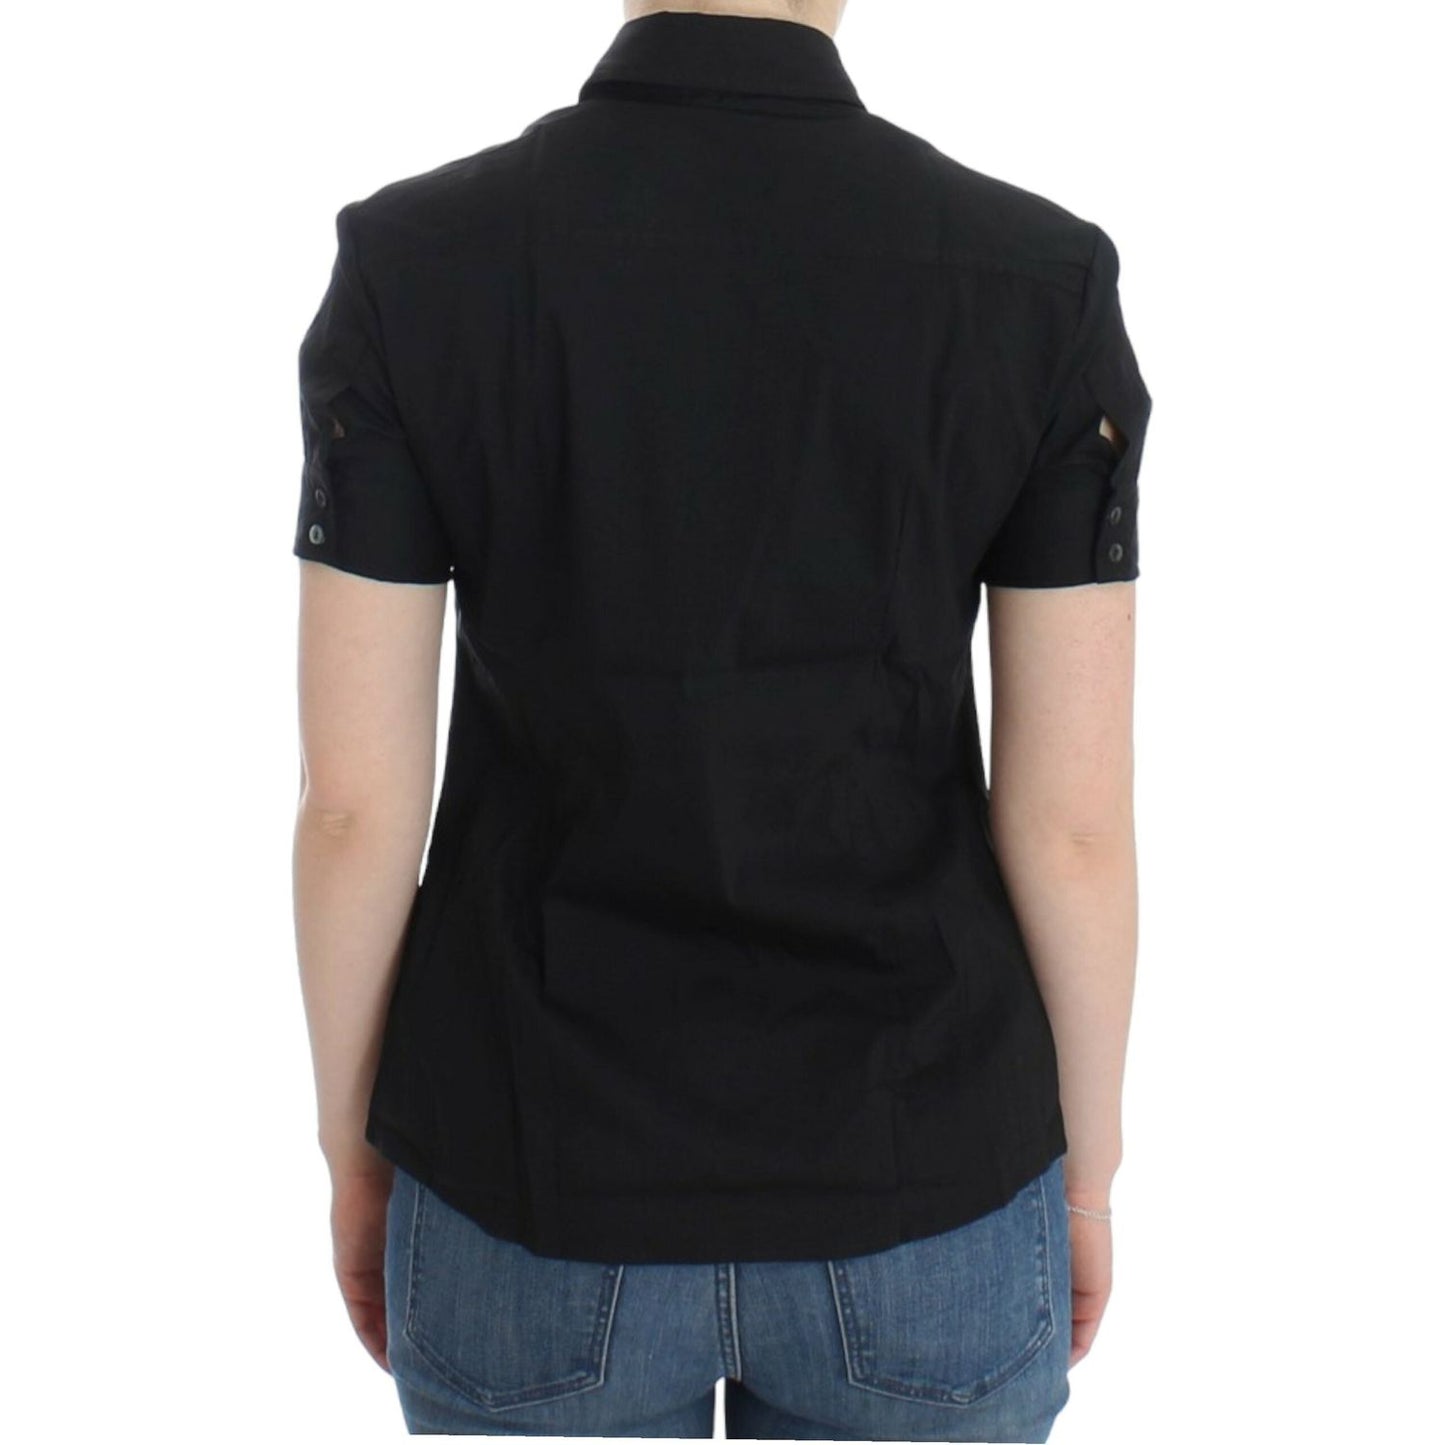 John Galliano Elegant Black Cotton Stretch Shortsleeve Blouse black-cotton-shirt-top 6699-black-cotton-shirt-top-2-scaled-cc21e6e6-d1e.jpg